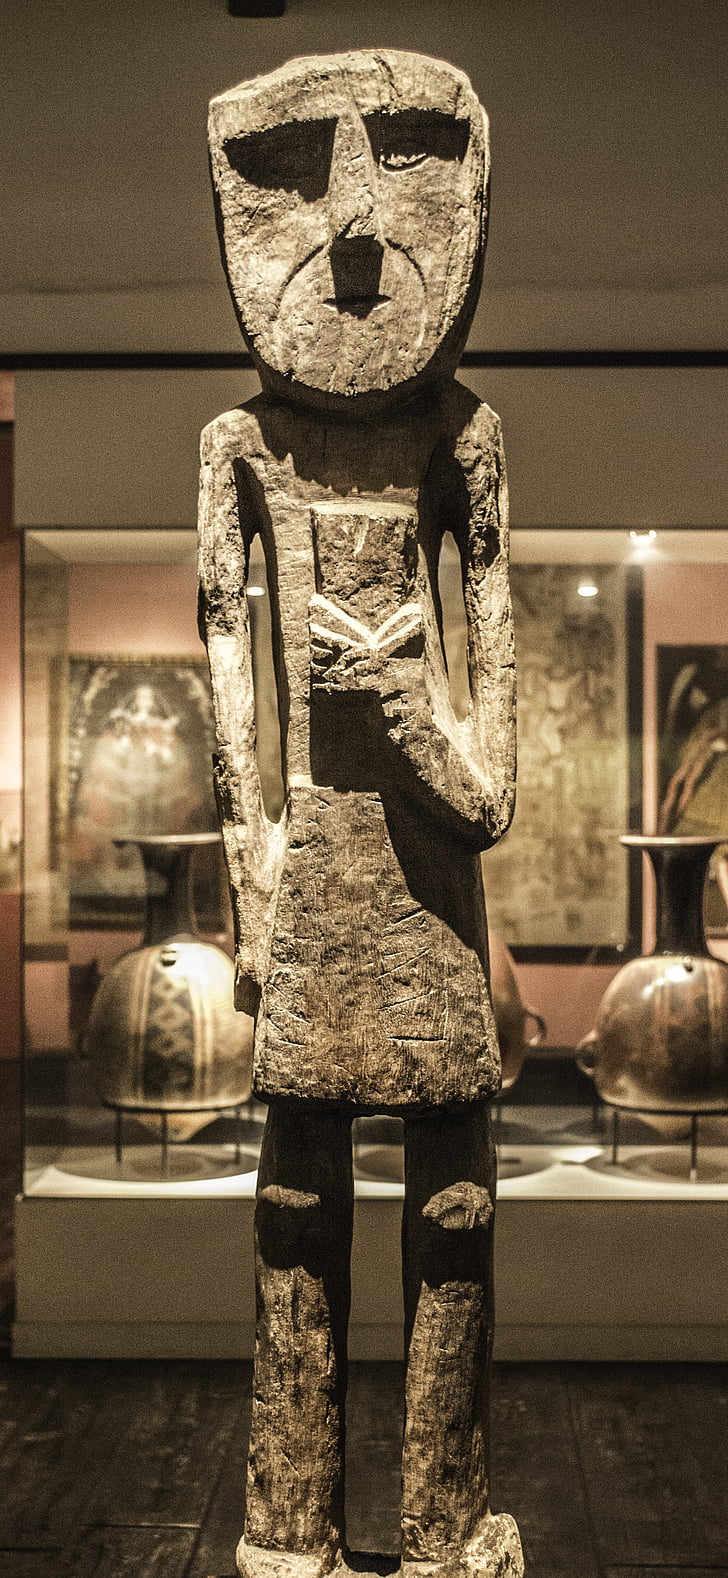 patsas, Museum, laiha, puinen, vanha, Perun, artefakti